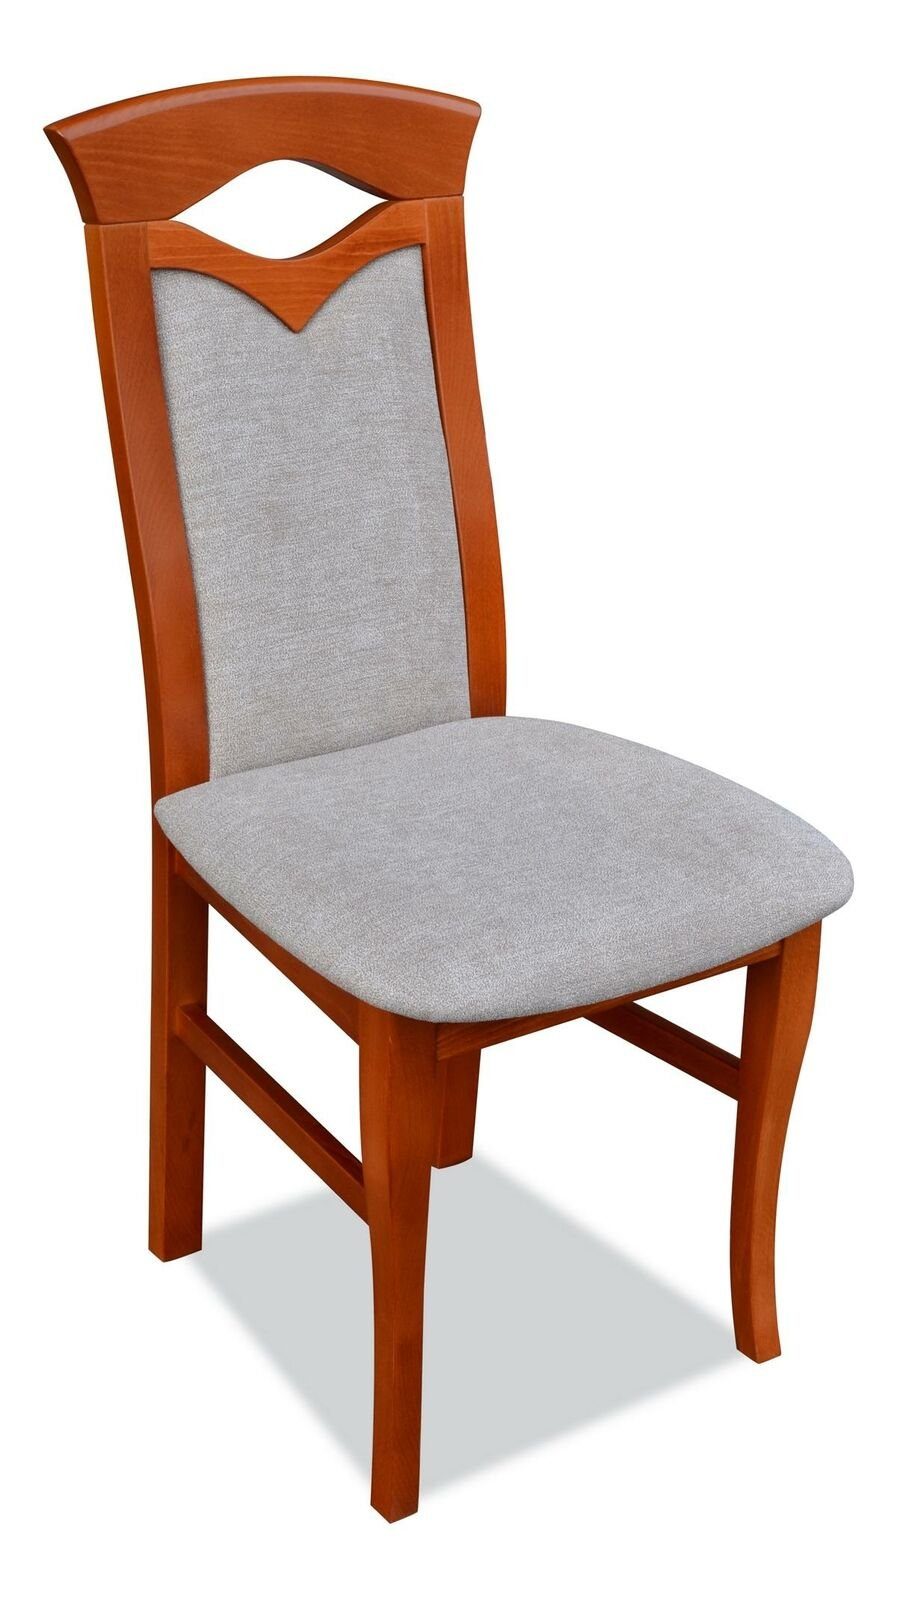 Textil Esszimmer Set Sessel Küche Stühle Stuhl, Sitz JVmoebel Sessel 6x Stuhl Polsterstuhl Neu